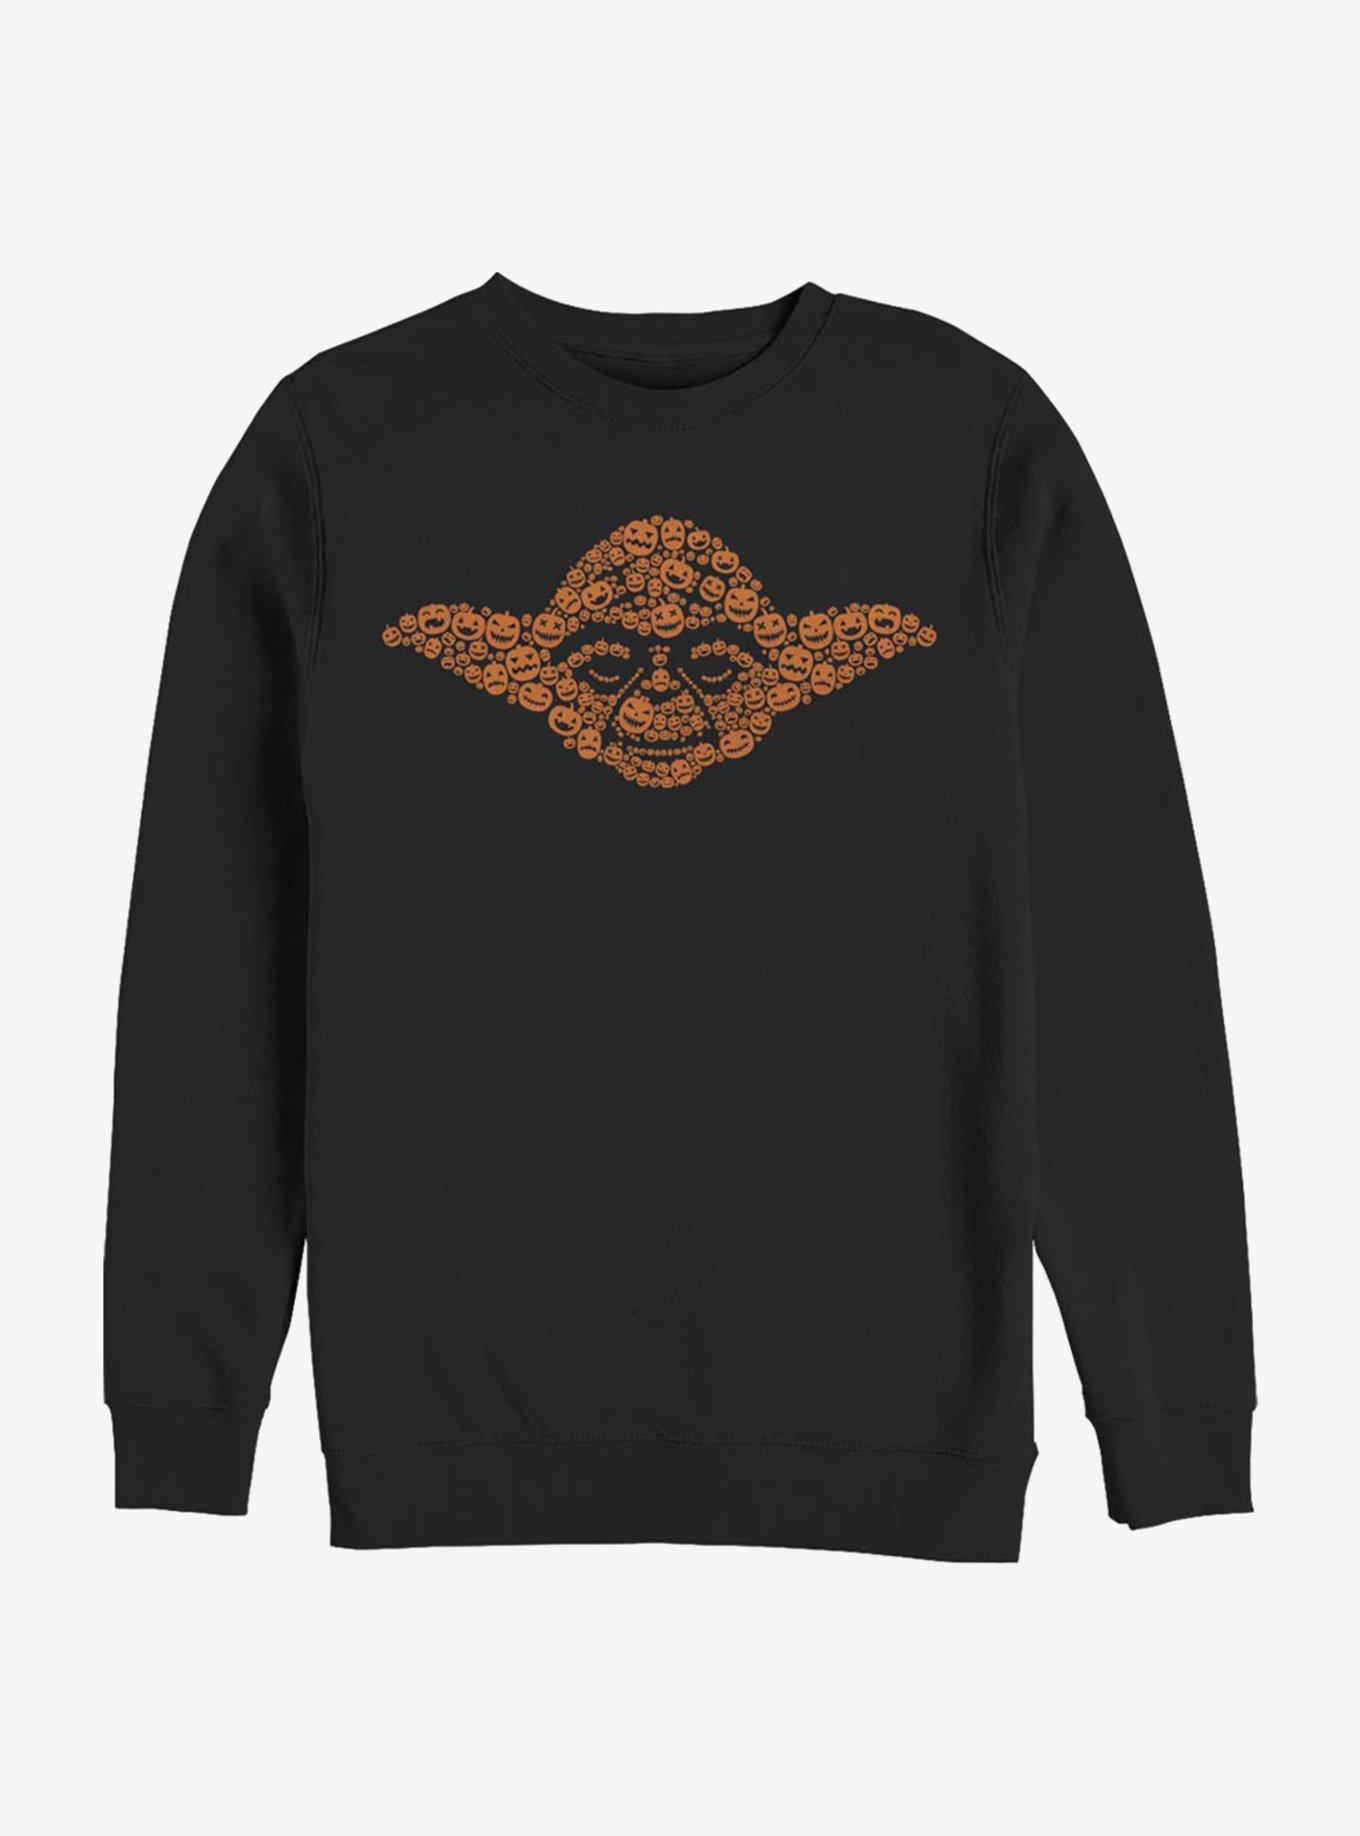 Star Wars Yoda Jackolanterns Sweatshirt, BLACK, hi-res